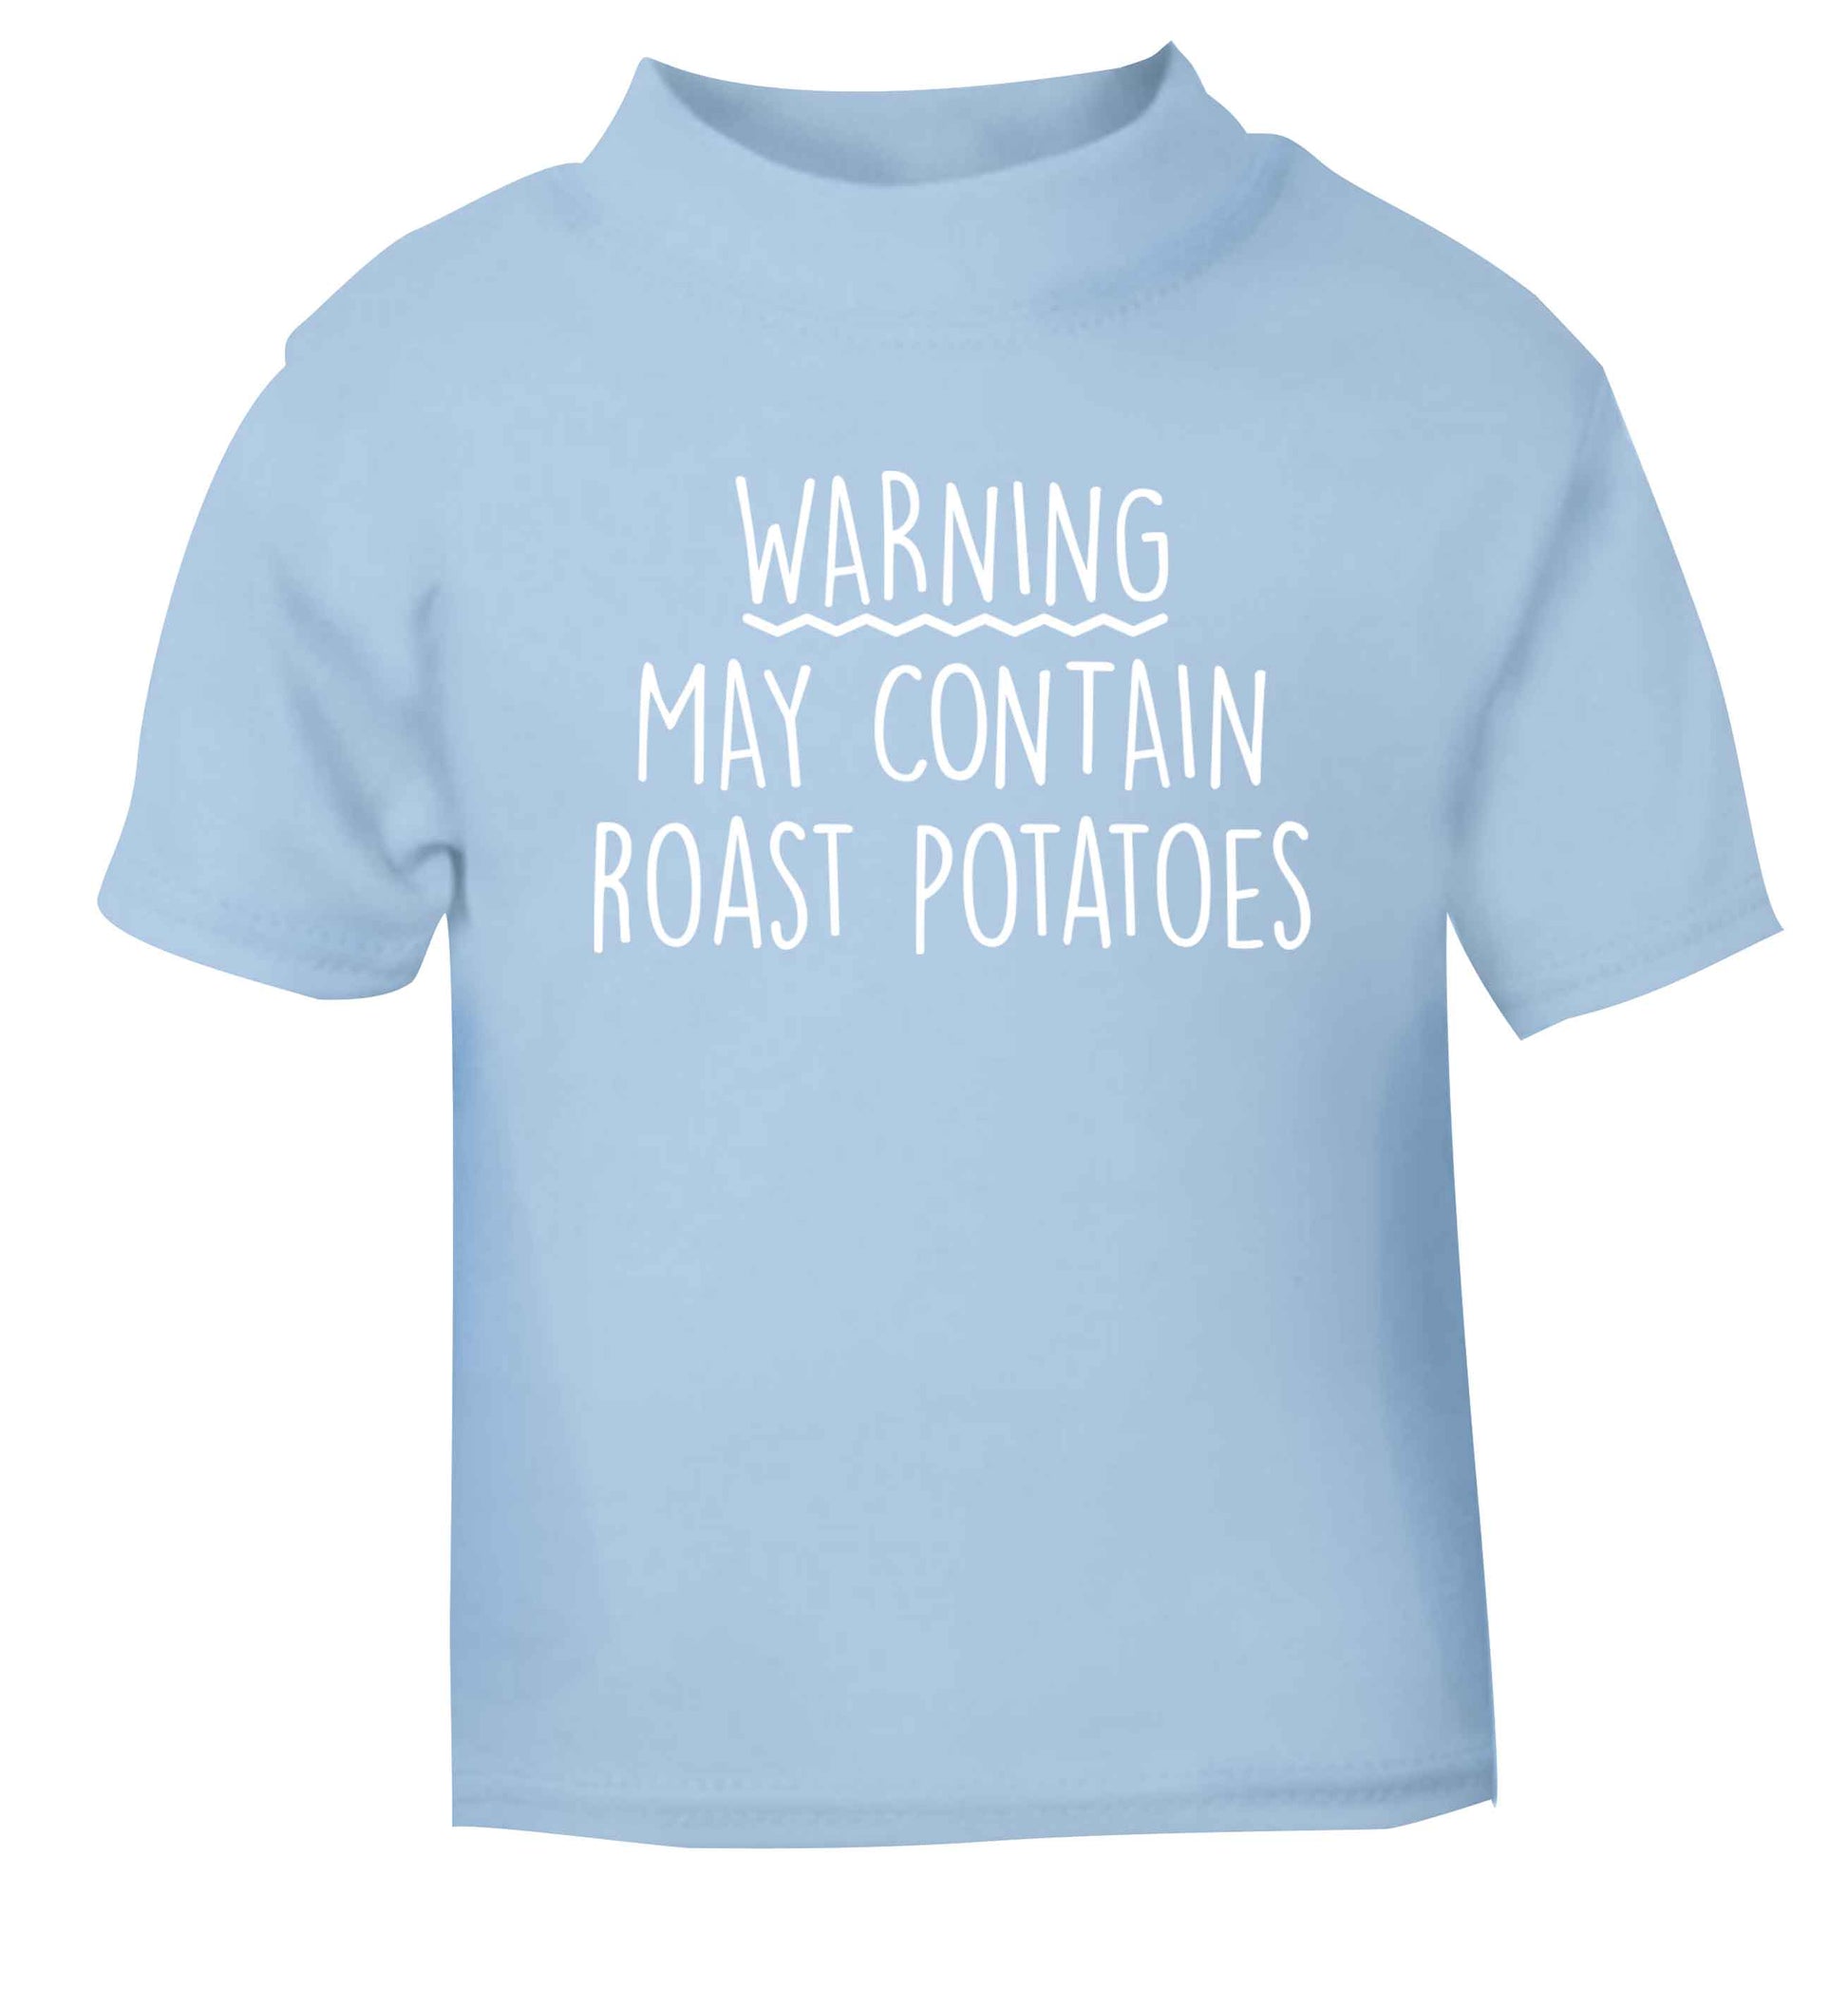 Warning may containg roast potatoes light blue baby toddler Tshirt 2 Years